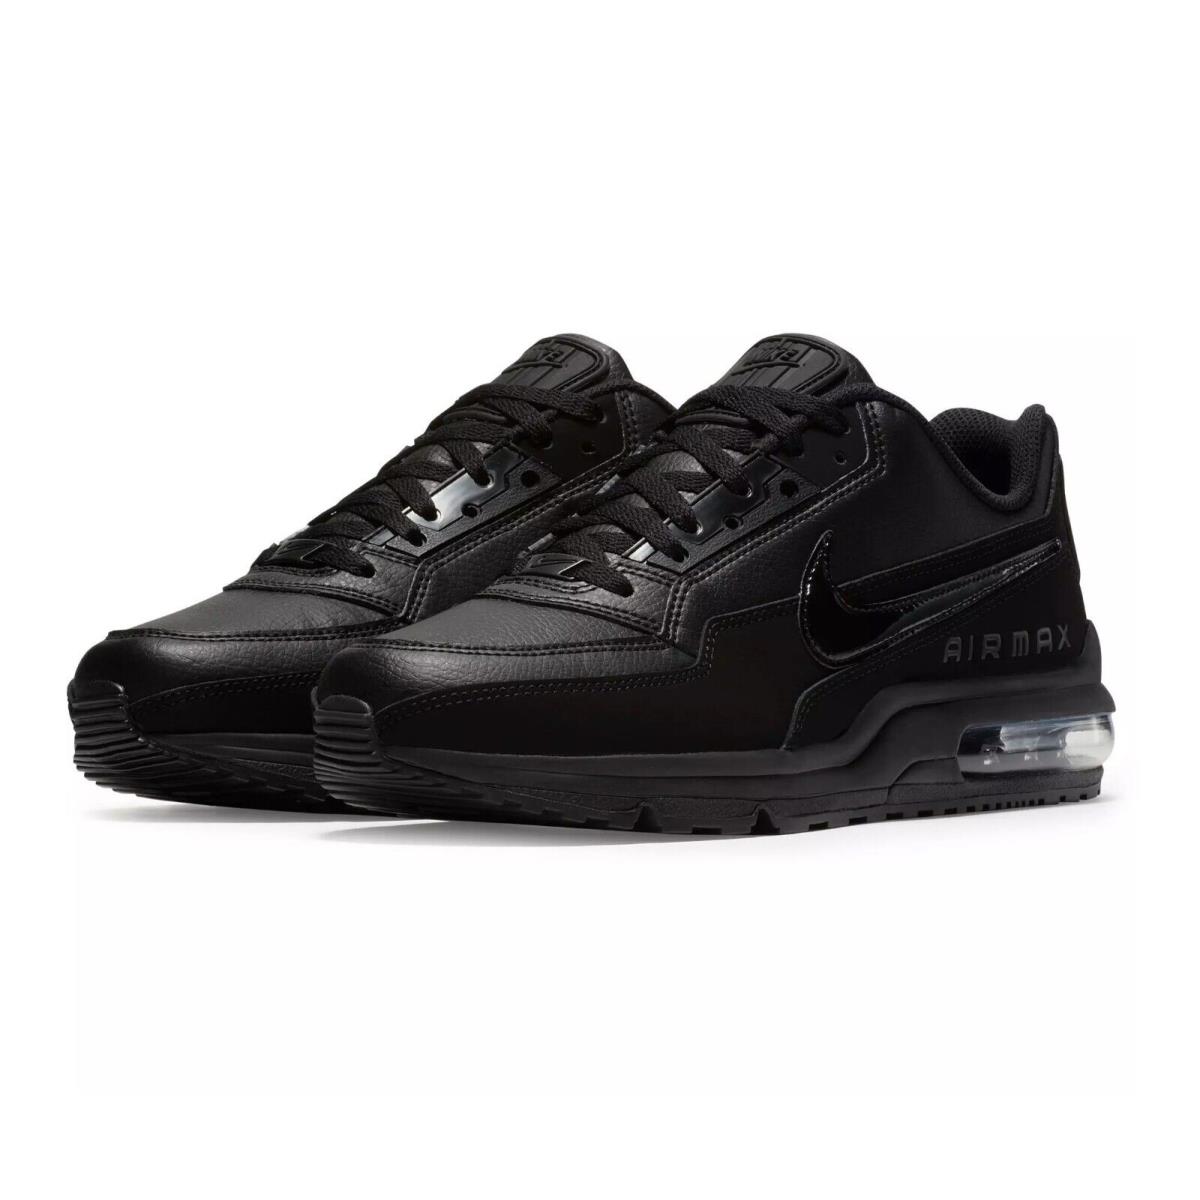 Nike Mens Air Max Ltd 3 Black/black/black Sneakers Shoes. 687977-020